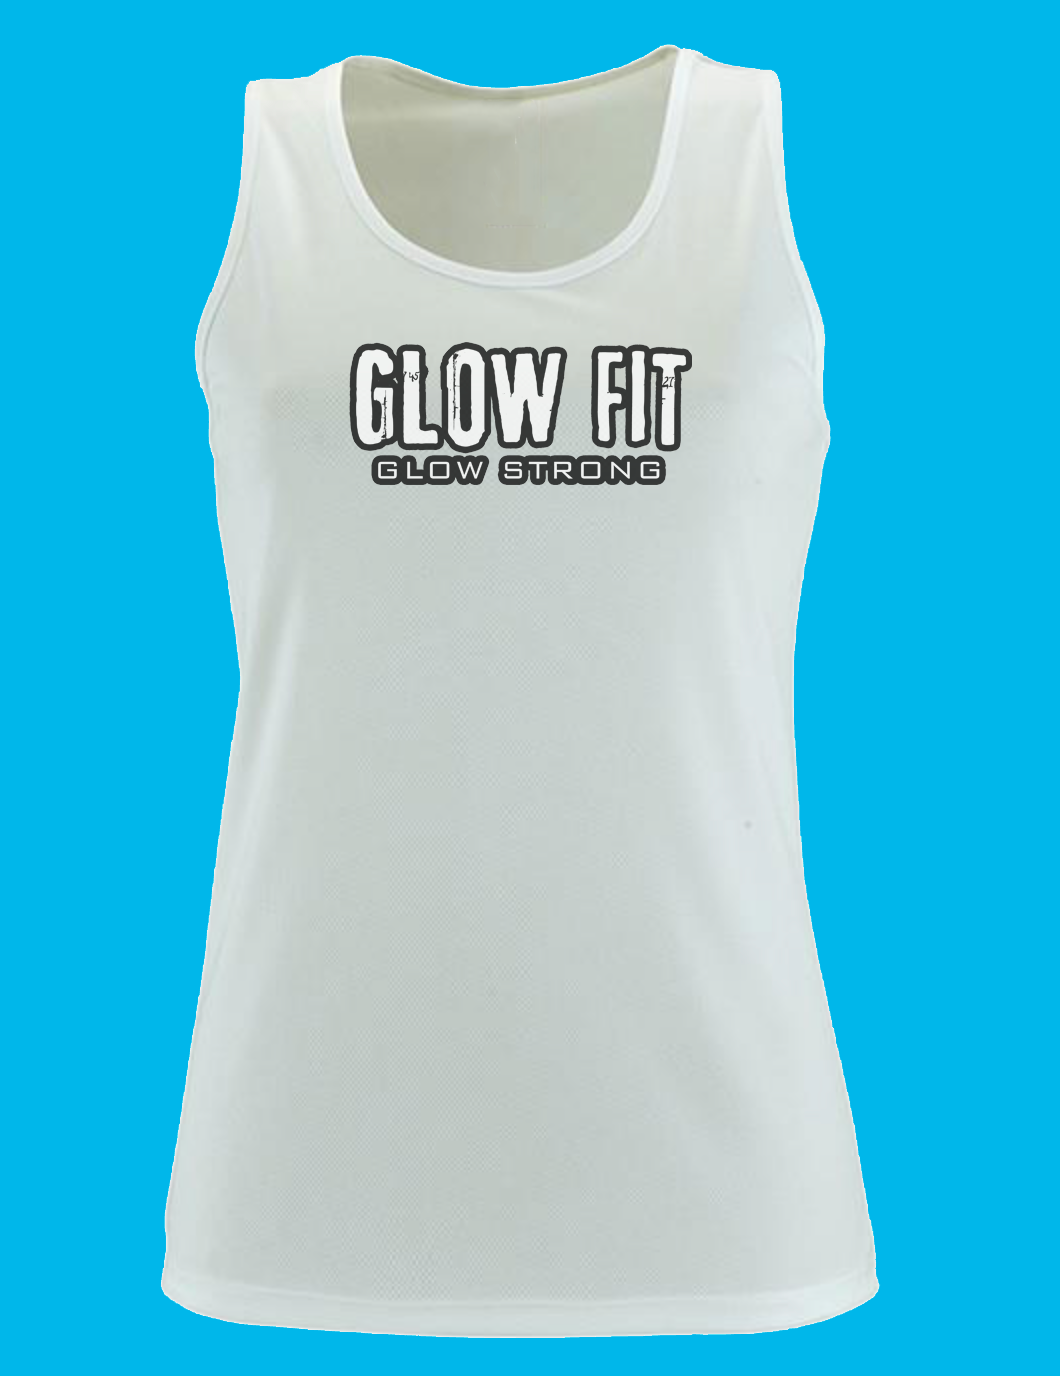 Neon Women's Glow Fit Vest